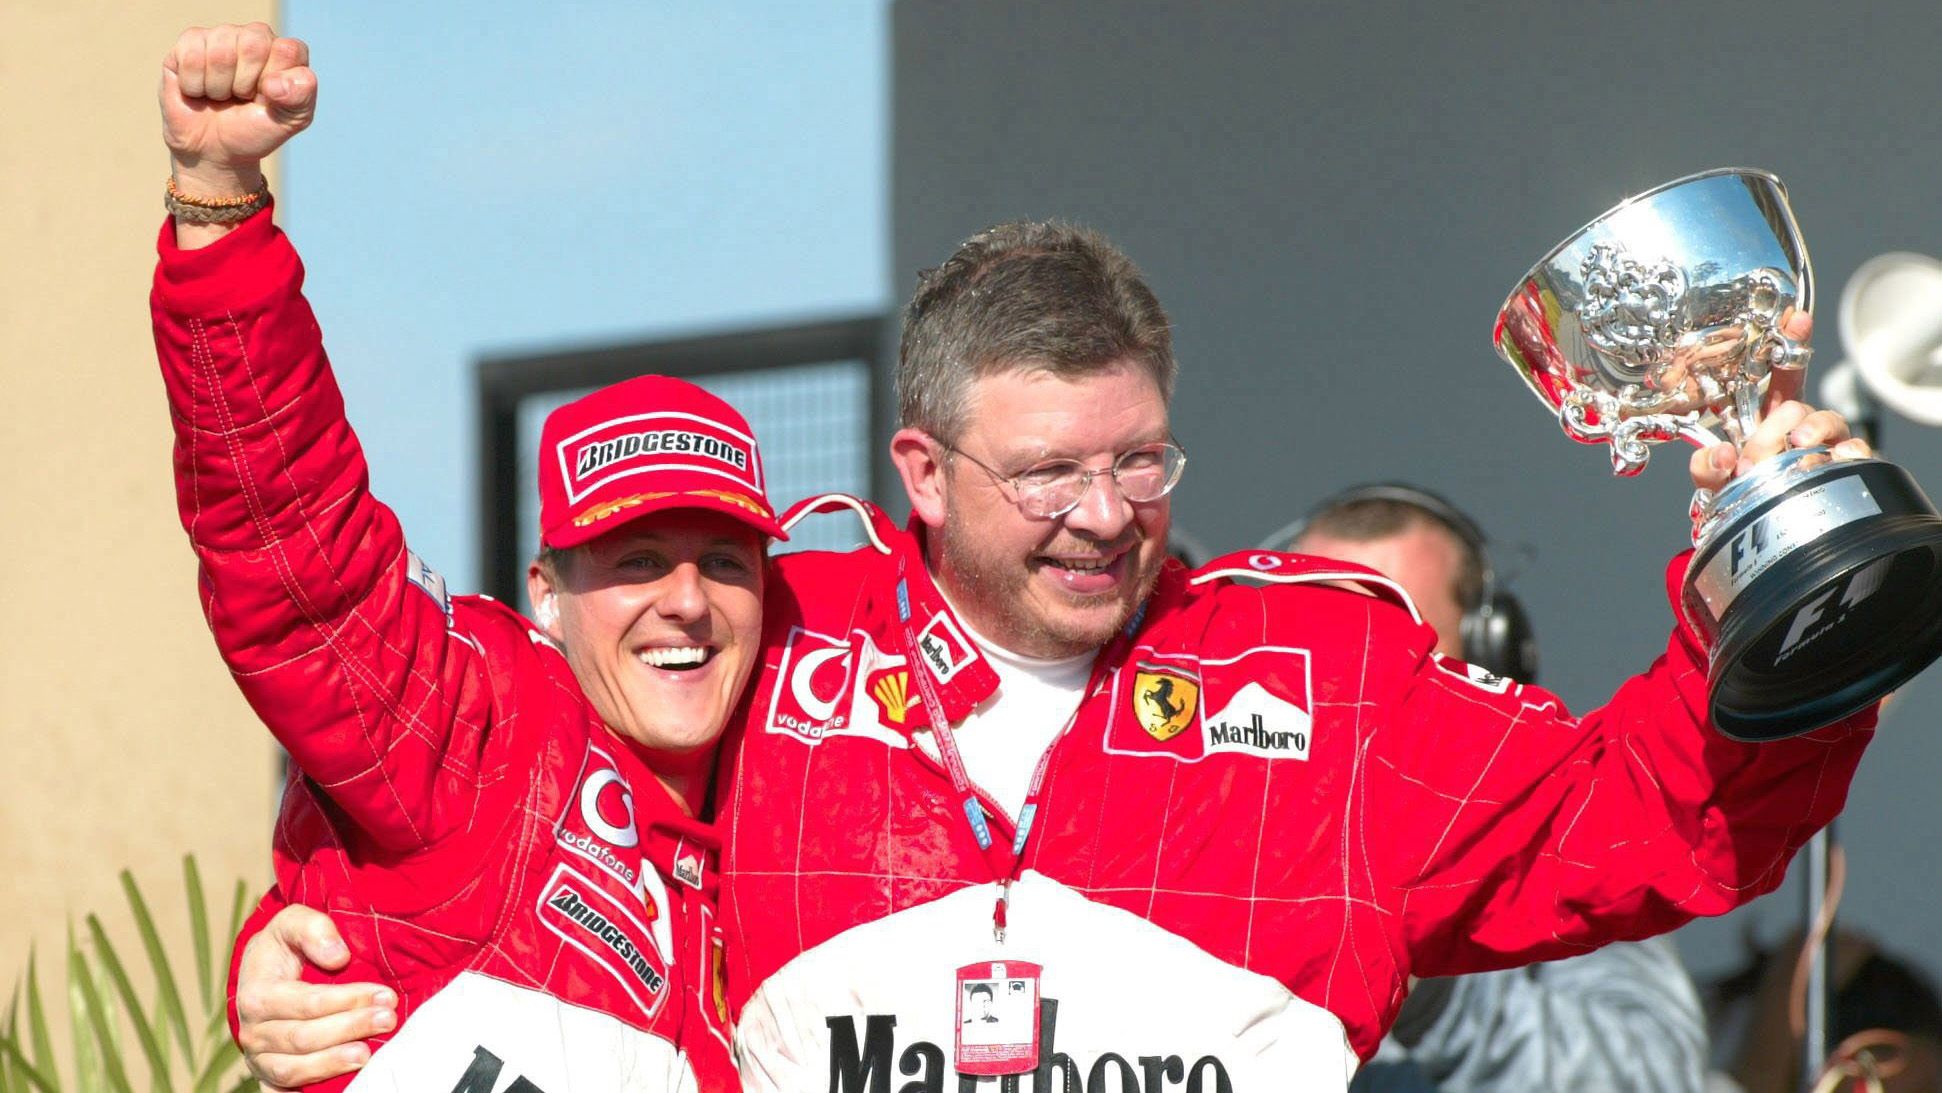 Michael Schumacher and Ross Brawn celebrate winning the 2002 Brazilian Grand Prix in Sao Paulo.